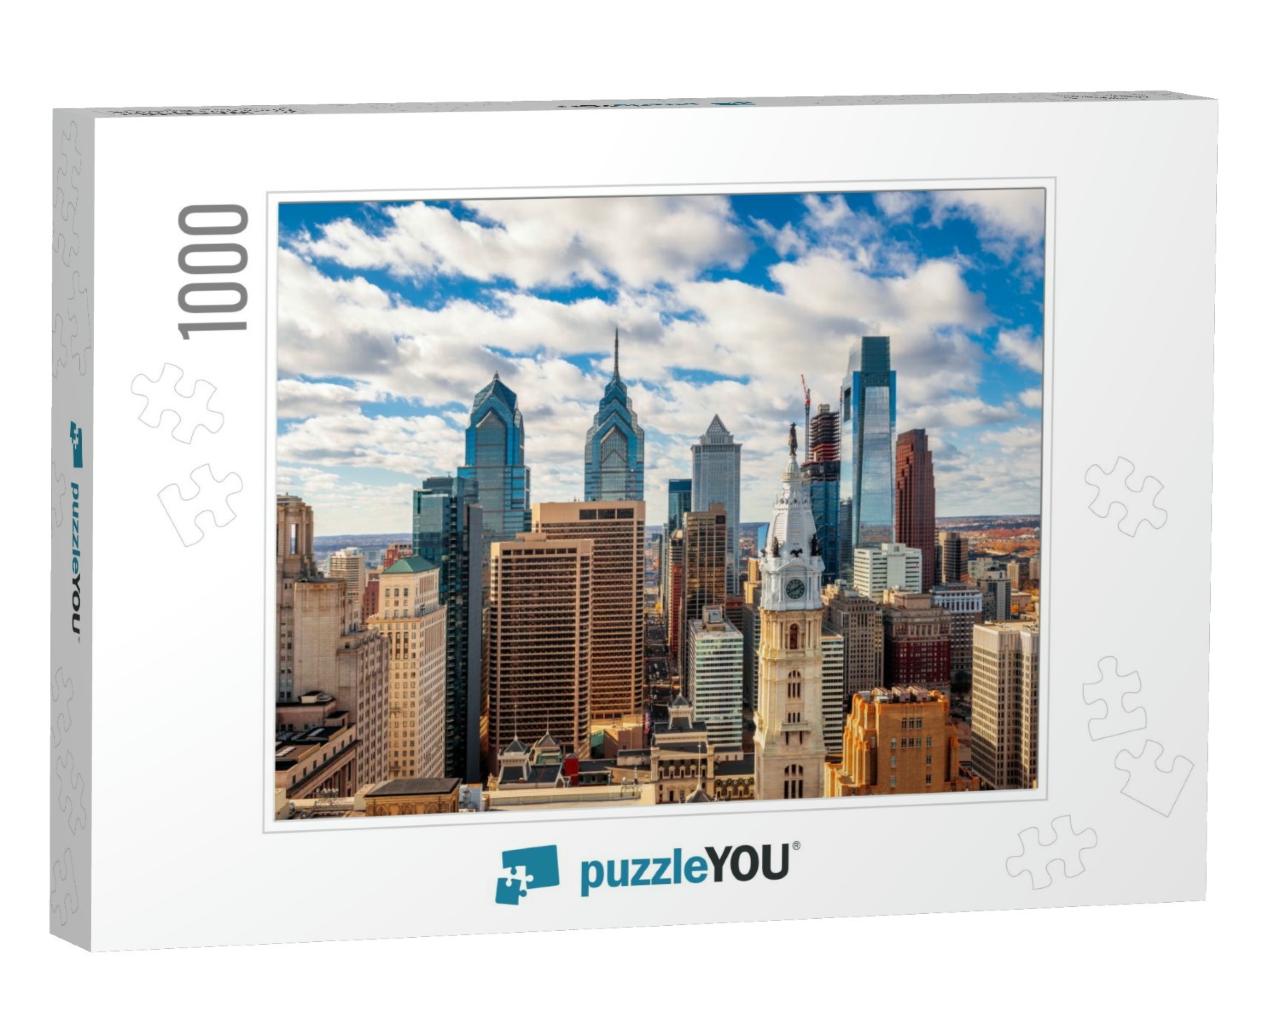 Philadelphia, Pennsylvania, USA Downtown City Skyline... Jigsaw Puzzle with 1000 pieces